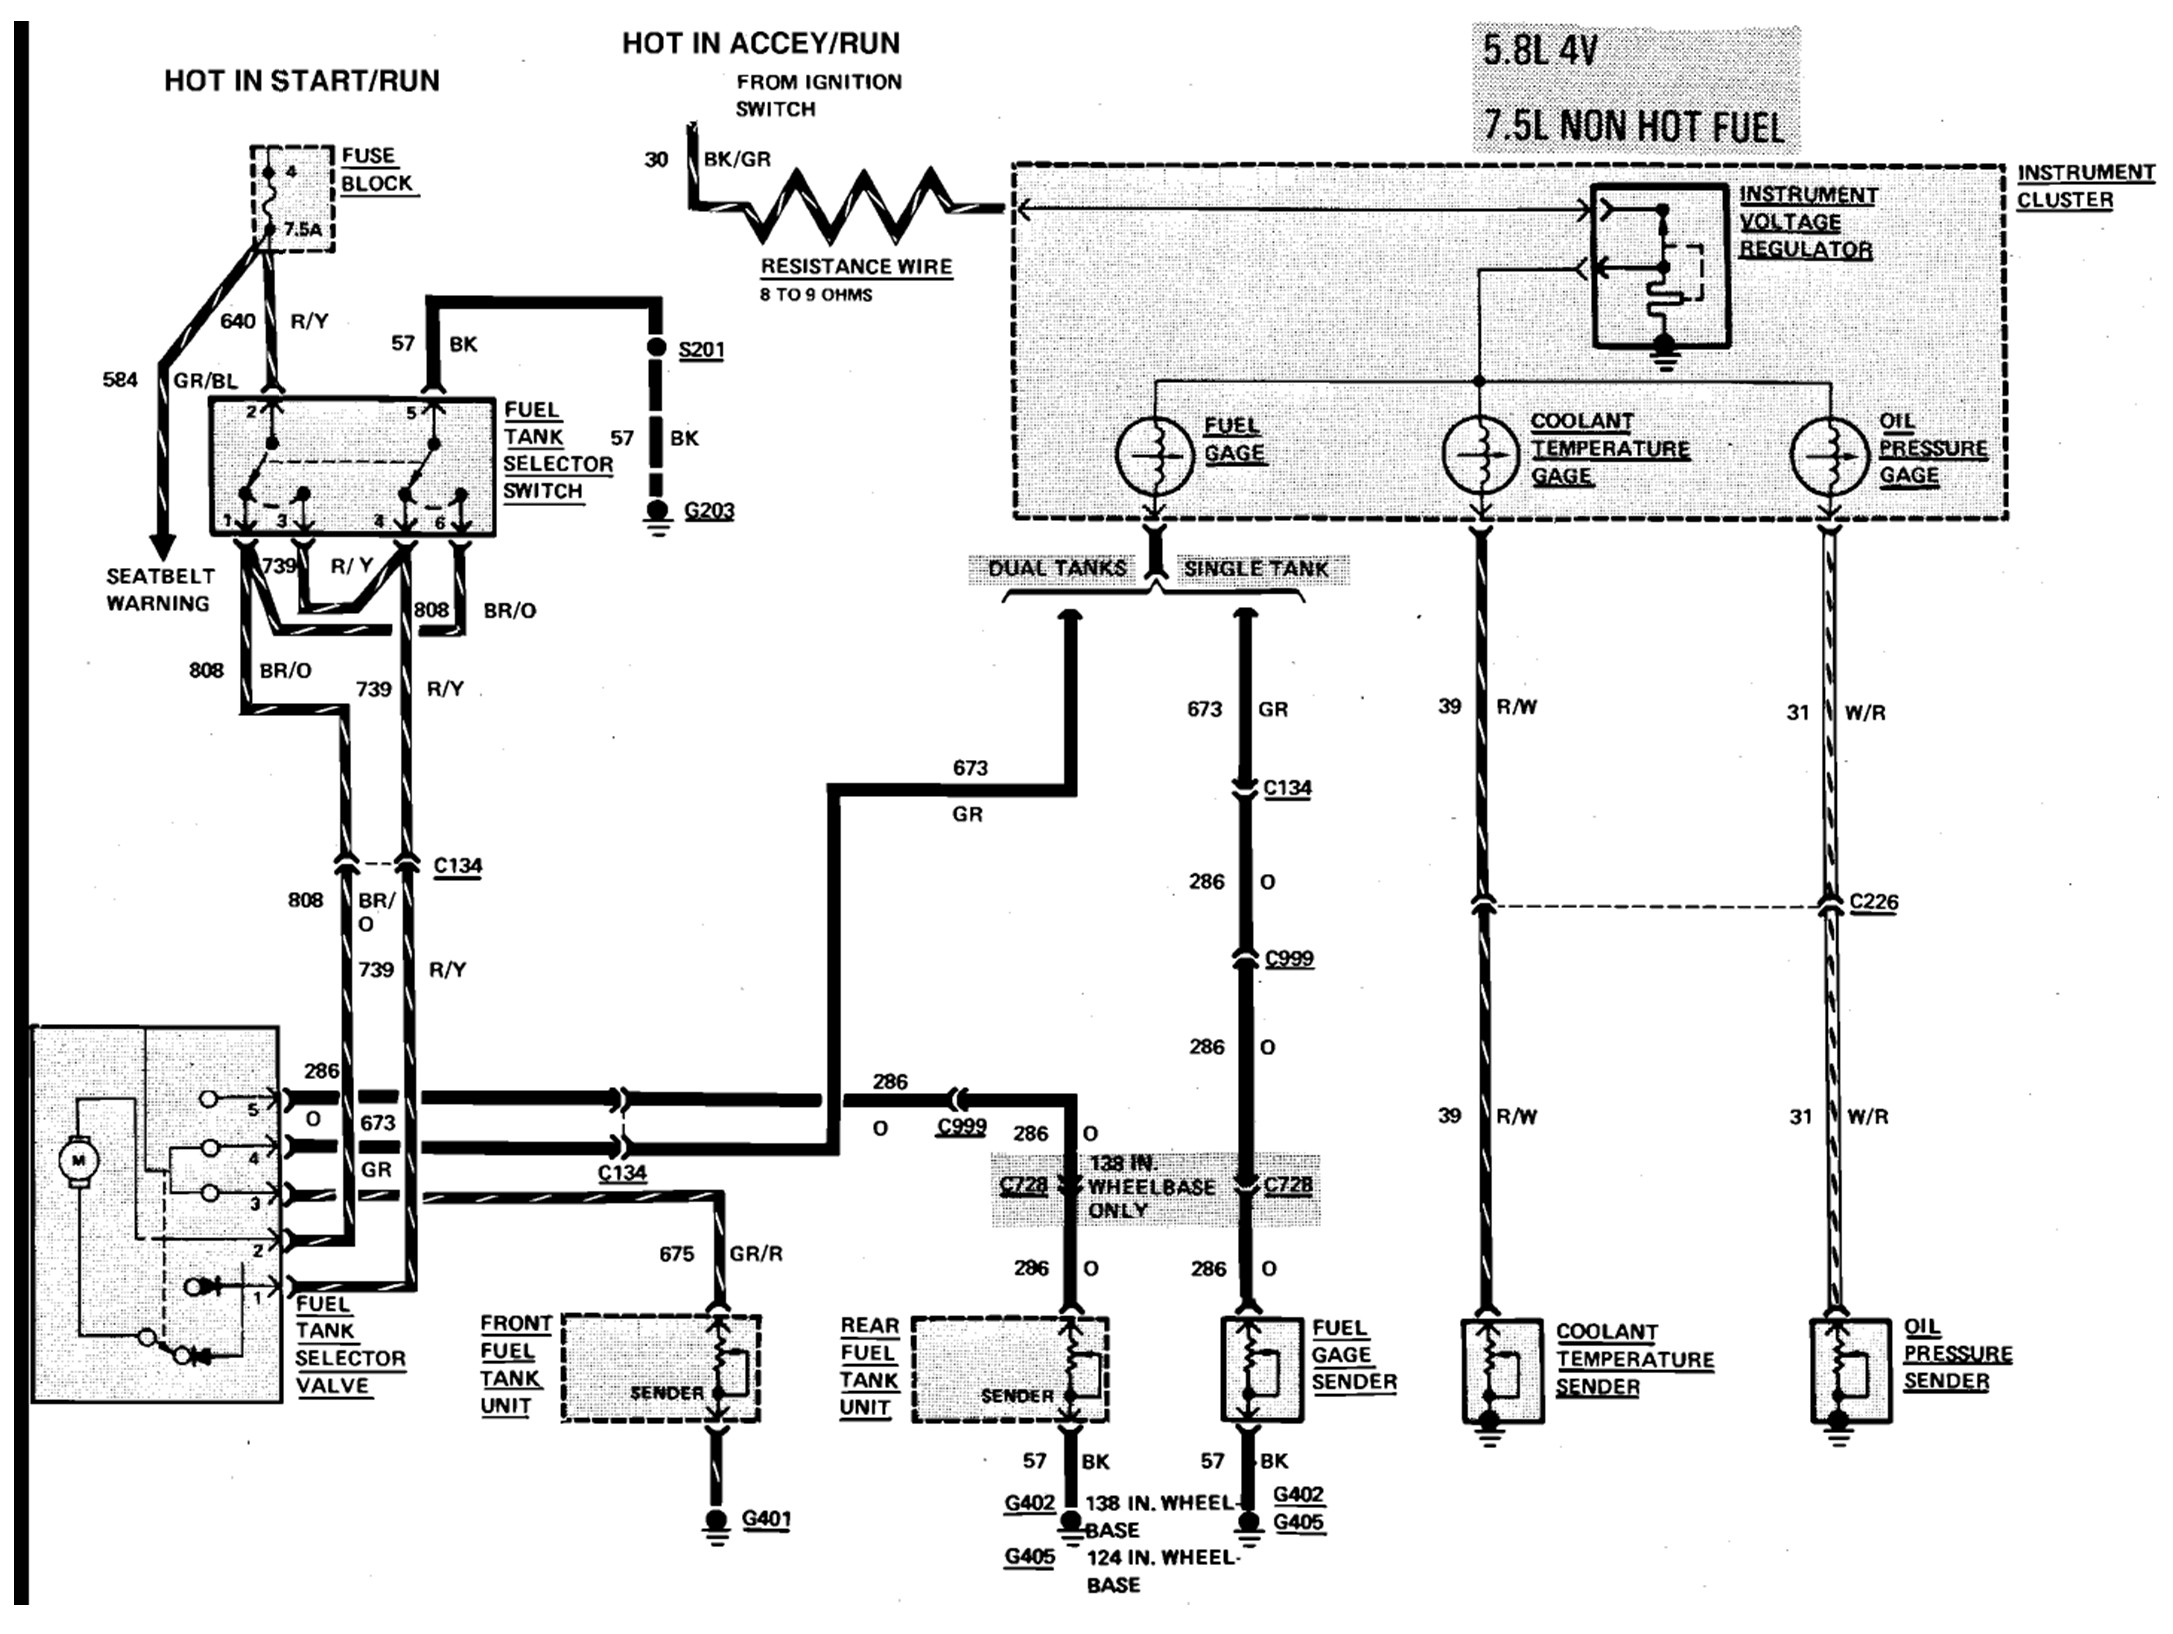 Vacuum Hose Routing Diagram 1986 ford F150 33 ford 60 Diesel Vacuum Line Diagram Wiring Diagram Full